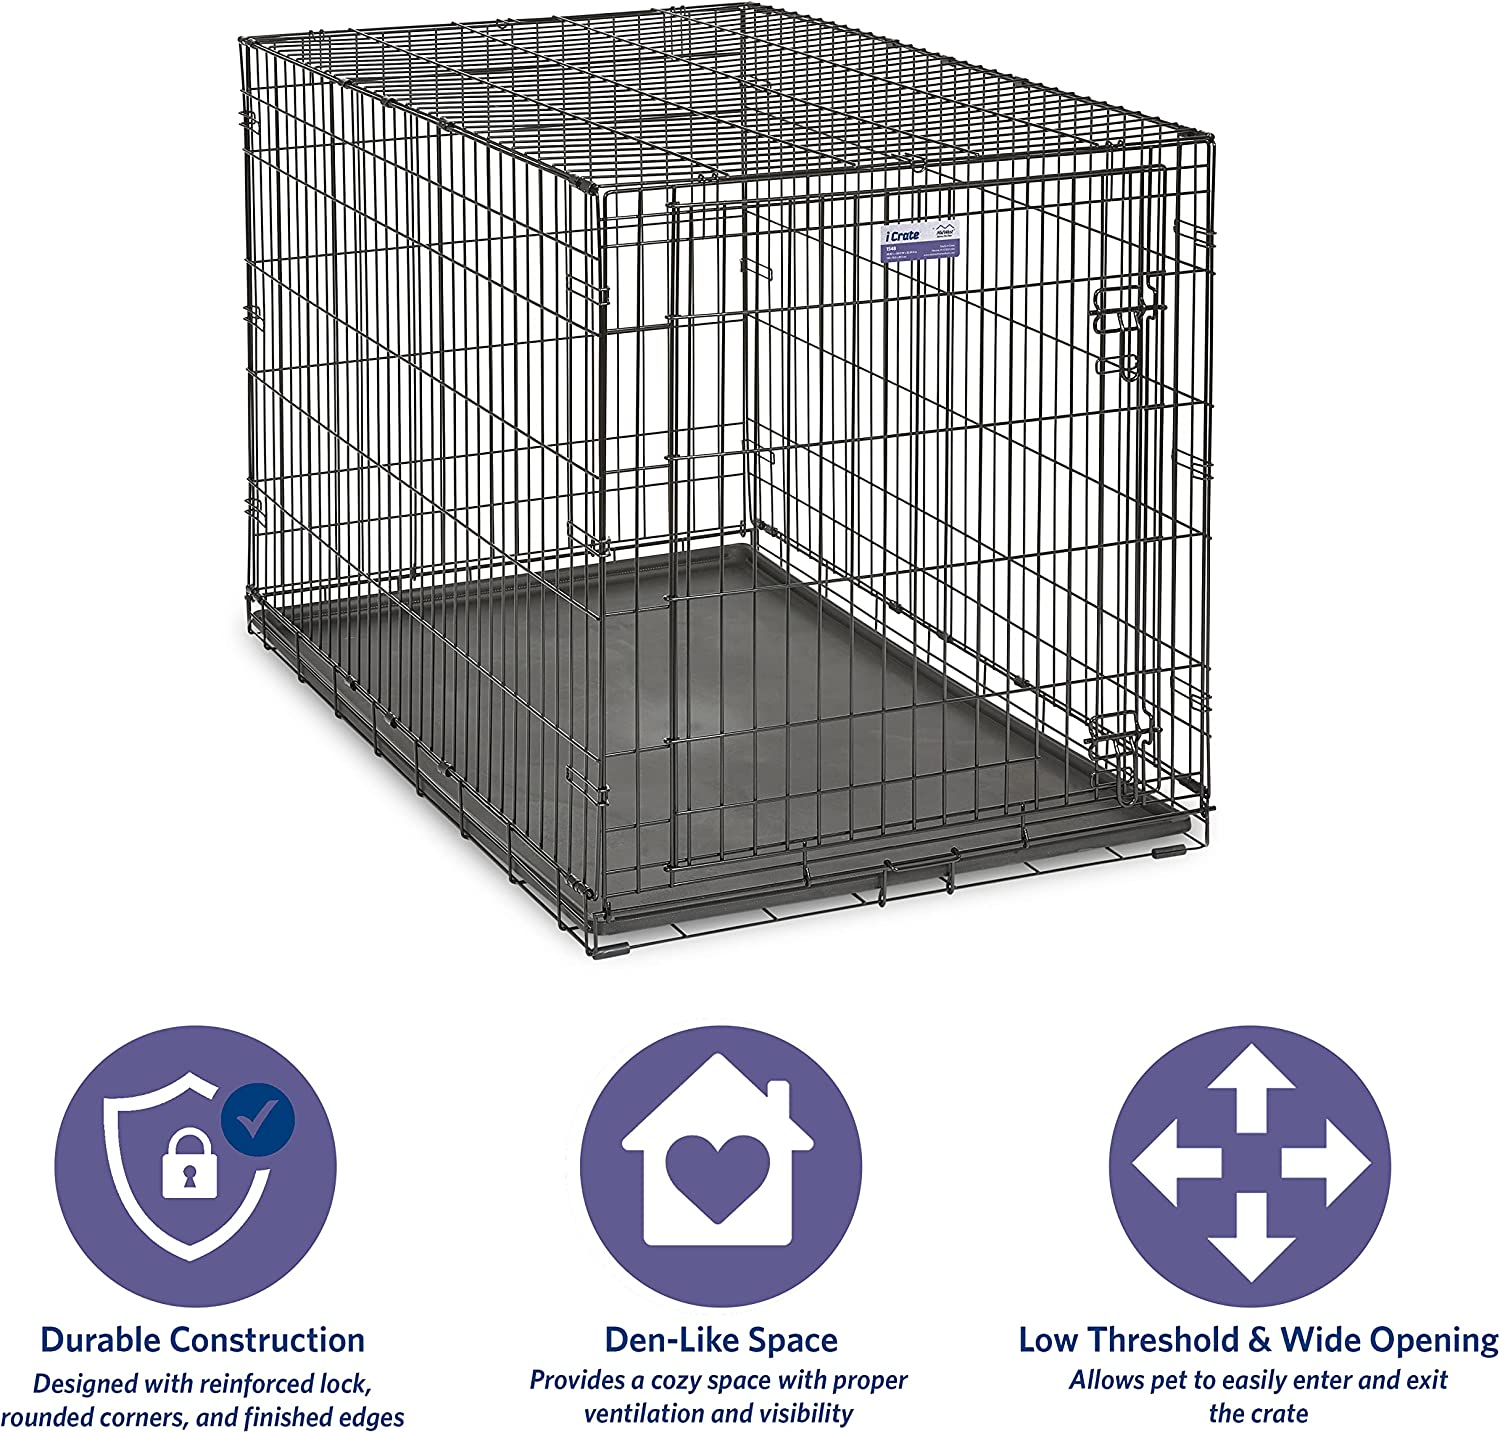 training dog kennel for your four legged family member